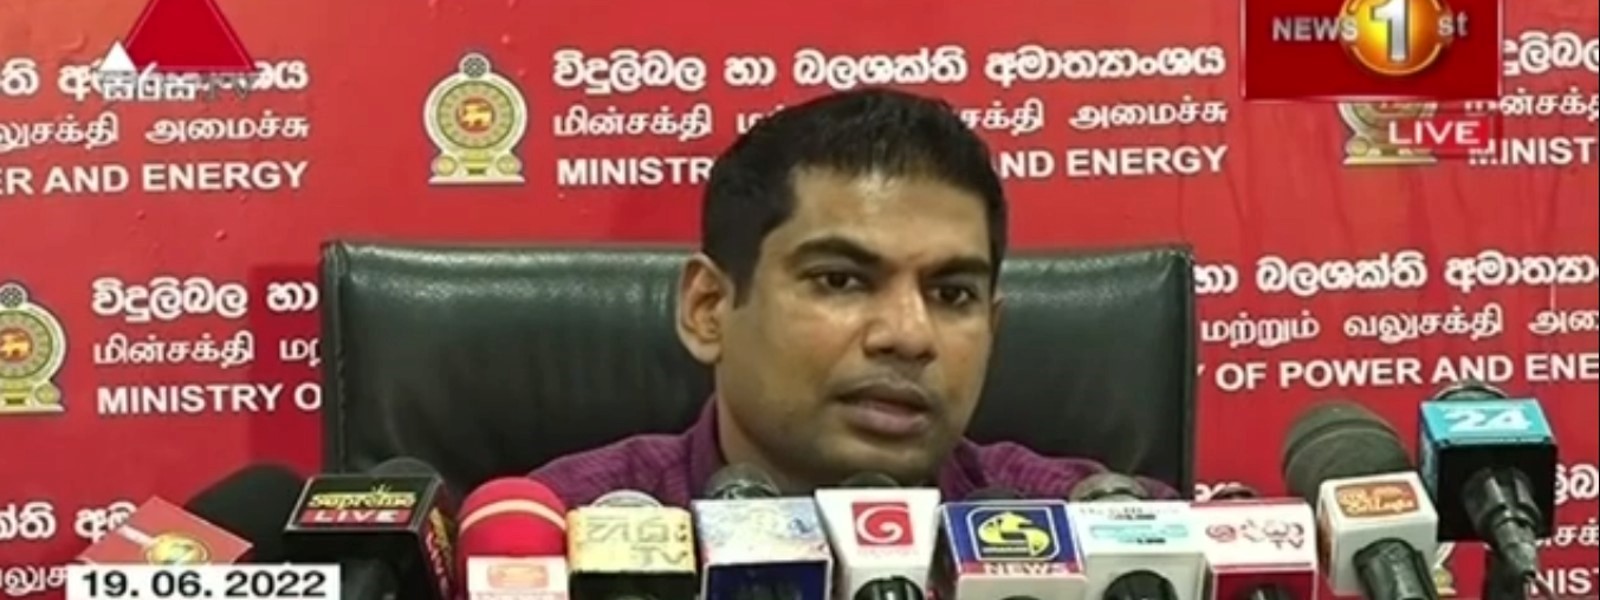 Sri Lanka : Update on Fuel Shipments